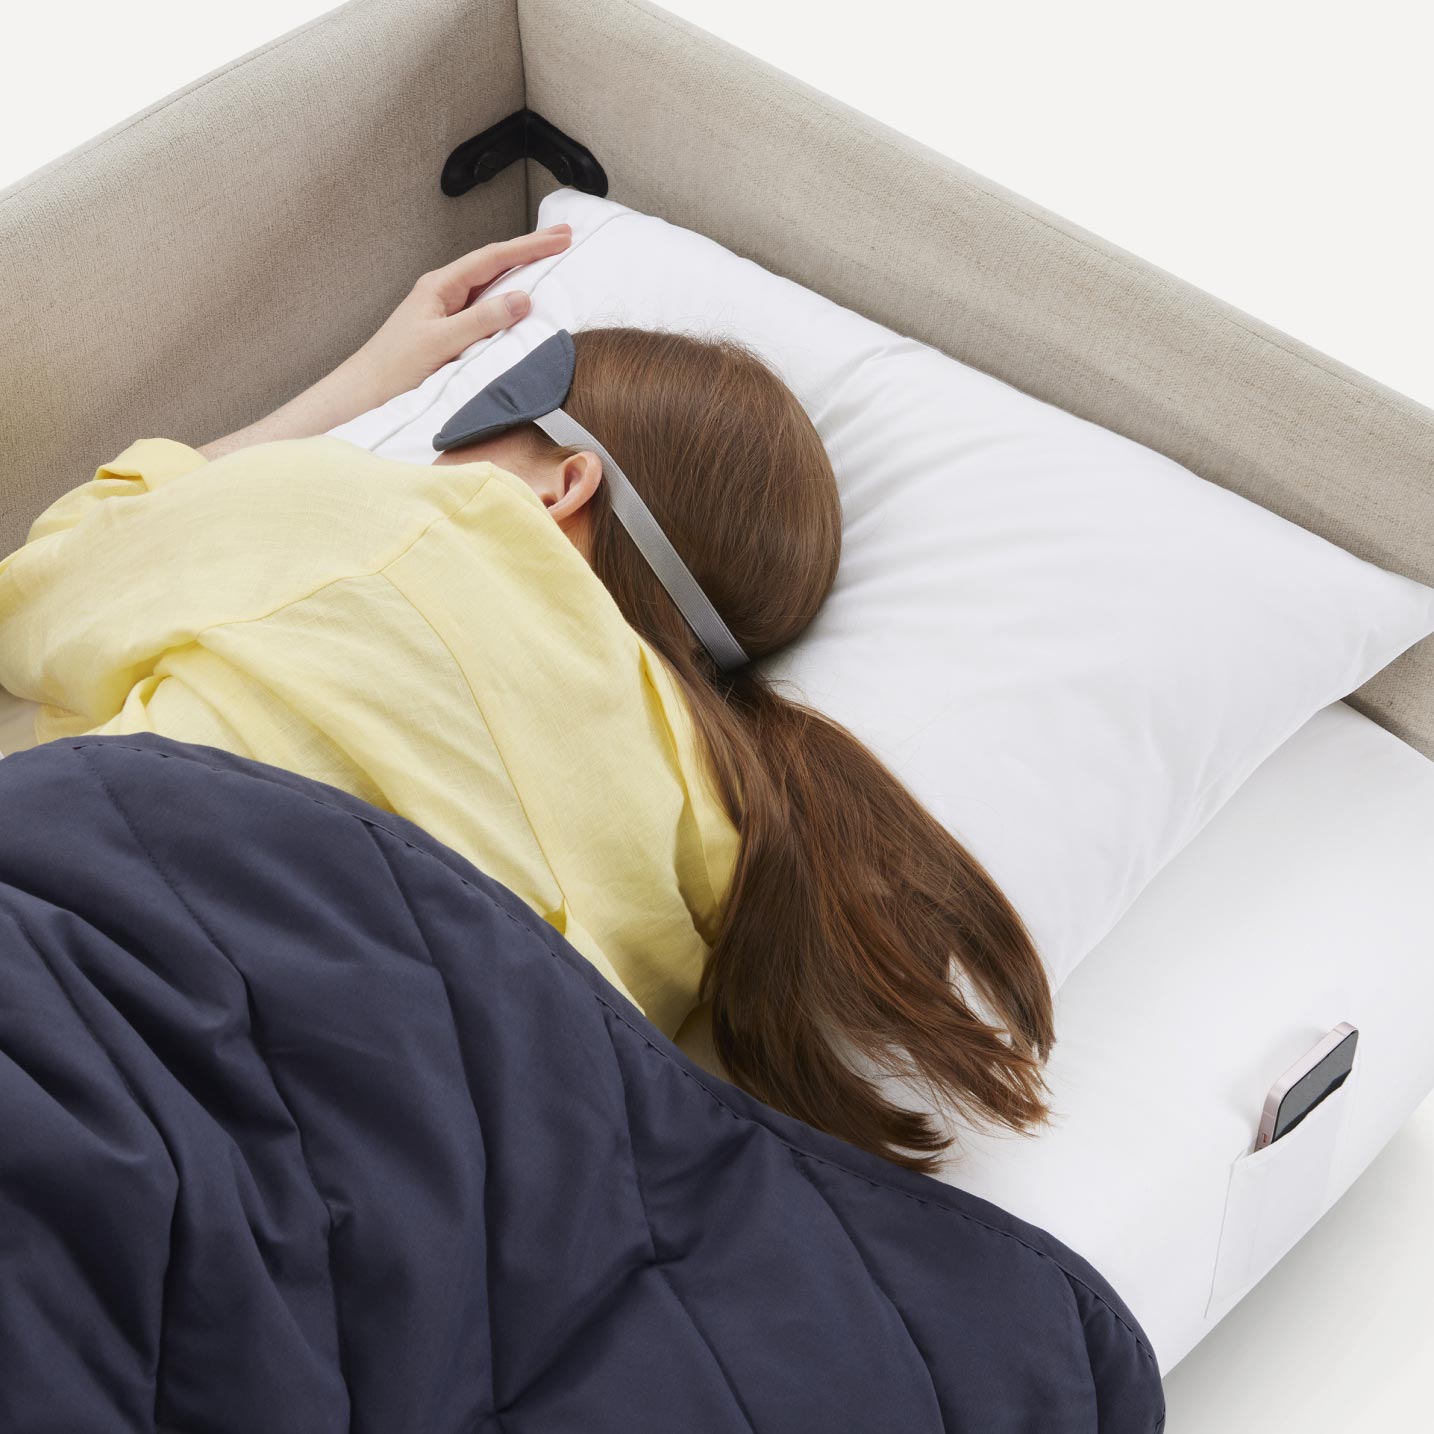 Burrow's $350 sleep kit turns any sofa into a bed